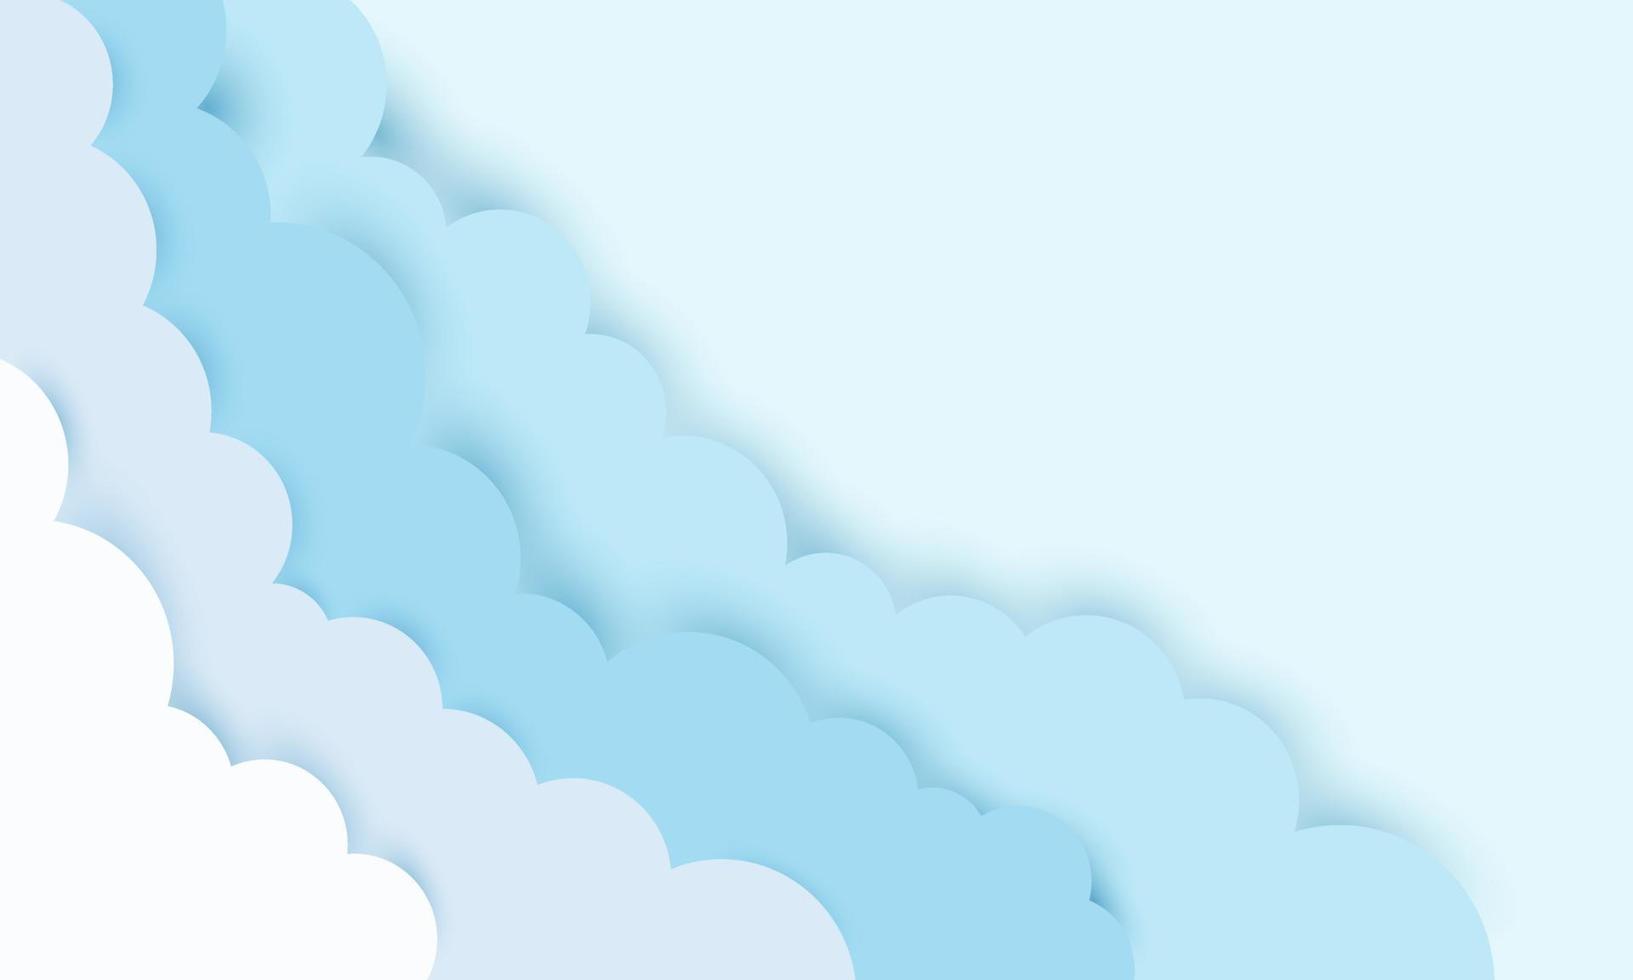 nuvole bianche realistiche tagliate su carta blu vettore